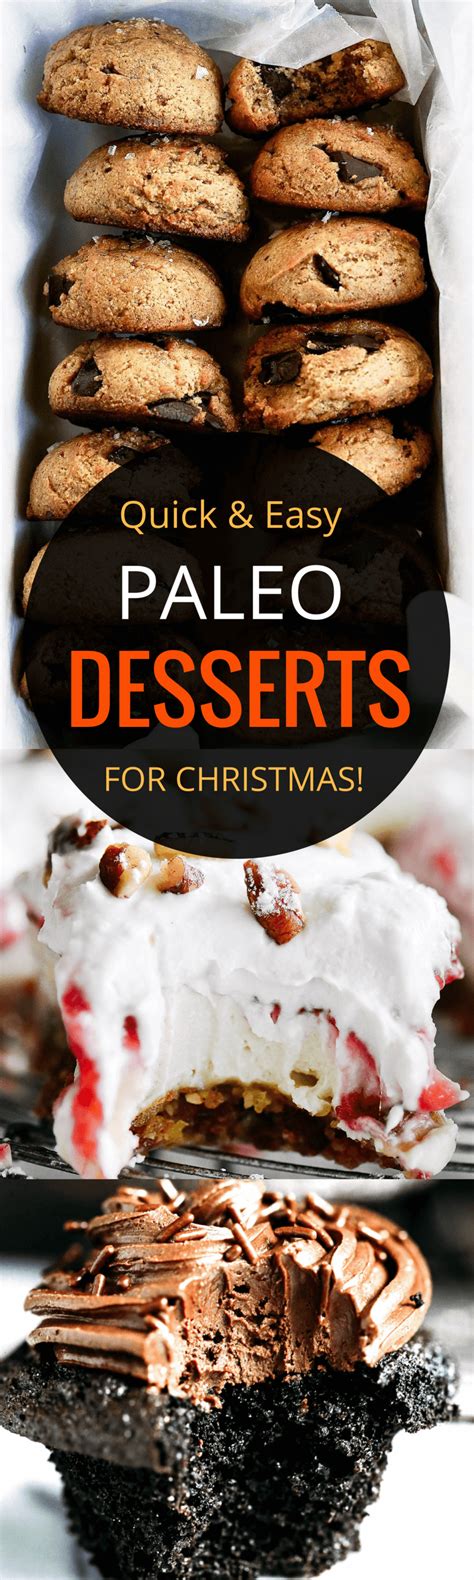 Paleo Desserts for Christmas 50 Guilt-Free Gluten-Free Paleo Recipes1508525390 PDF